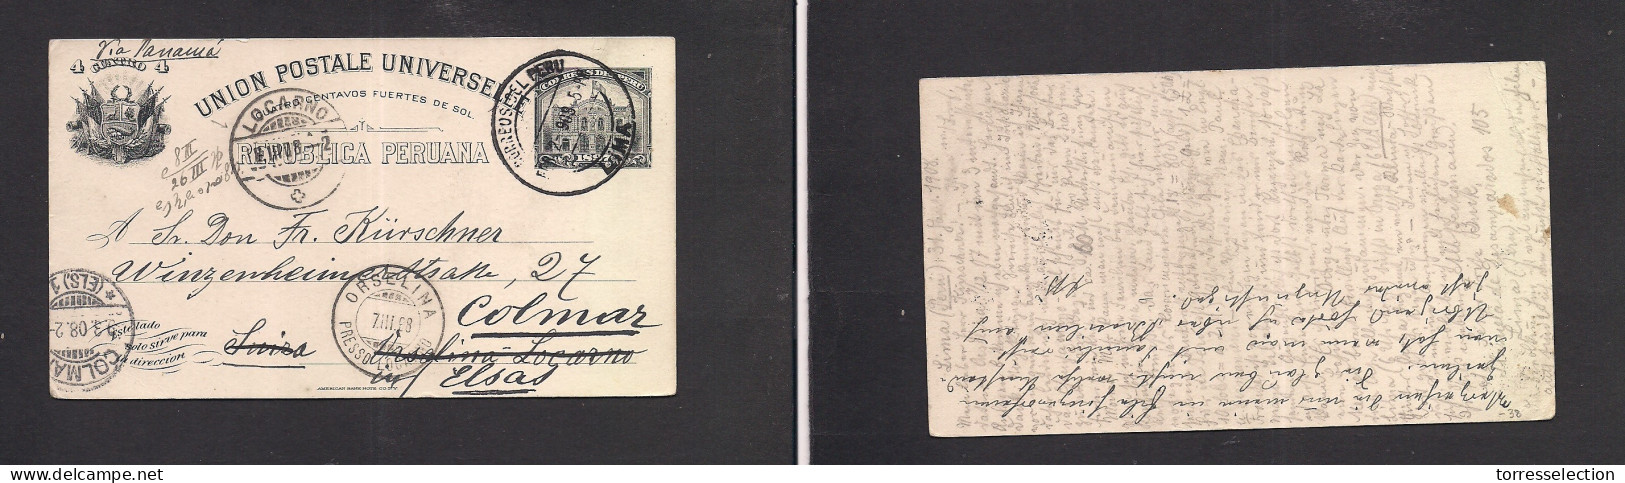 PERU. 1908 (31 Jan) Lima - Colmar, Switzerland (7 March) 4c Black Stat Card. Fine Used Via Panama. XSALE. - Perú